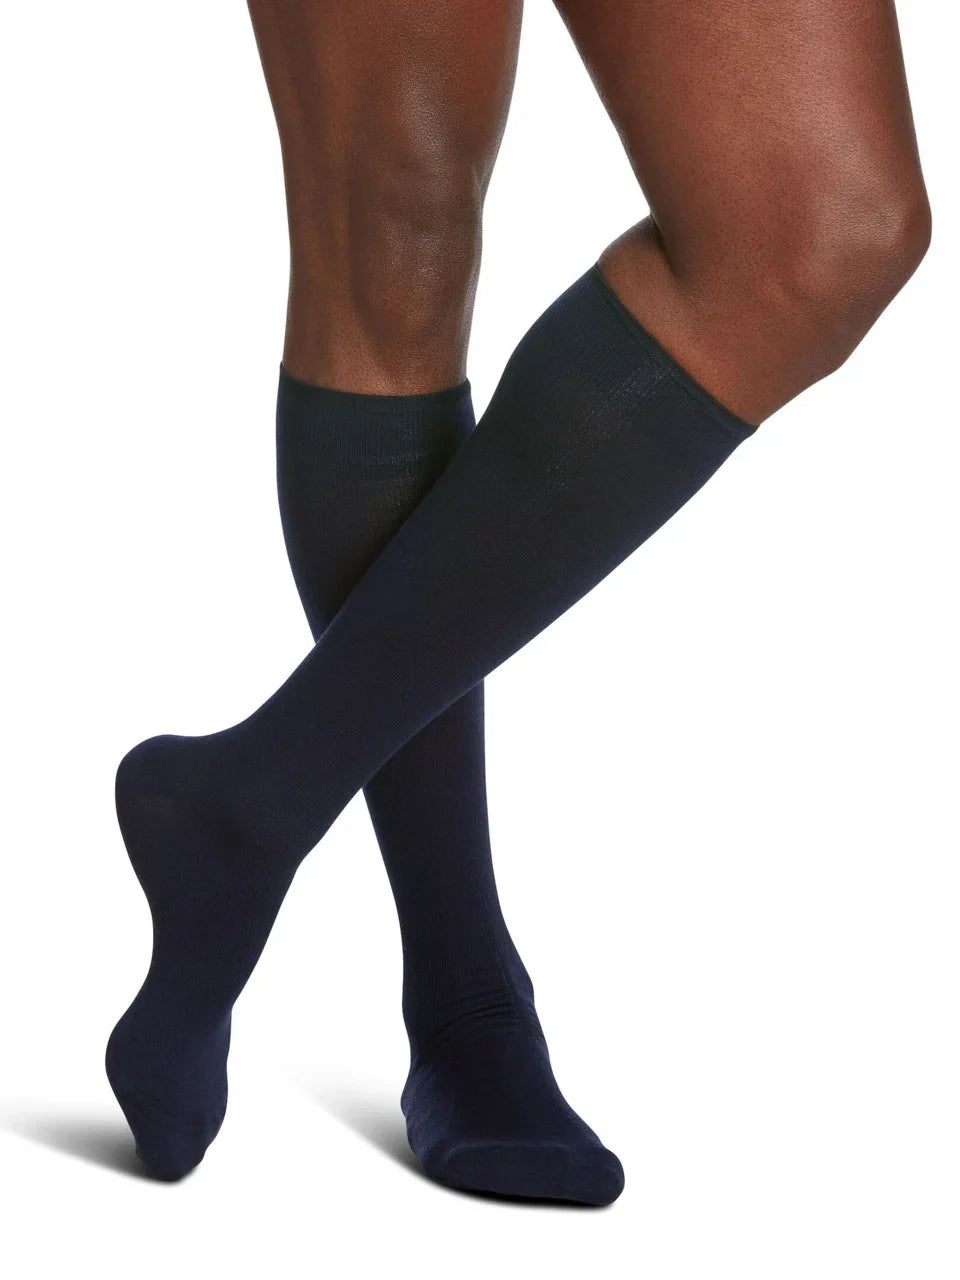 Sigvaris 190 All Season Merino Wool Compression Socks 15-20 mmHg Calf High For Men Closed Toe